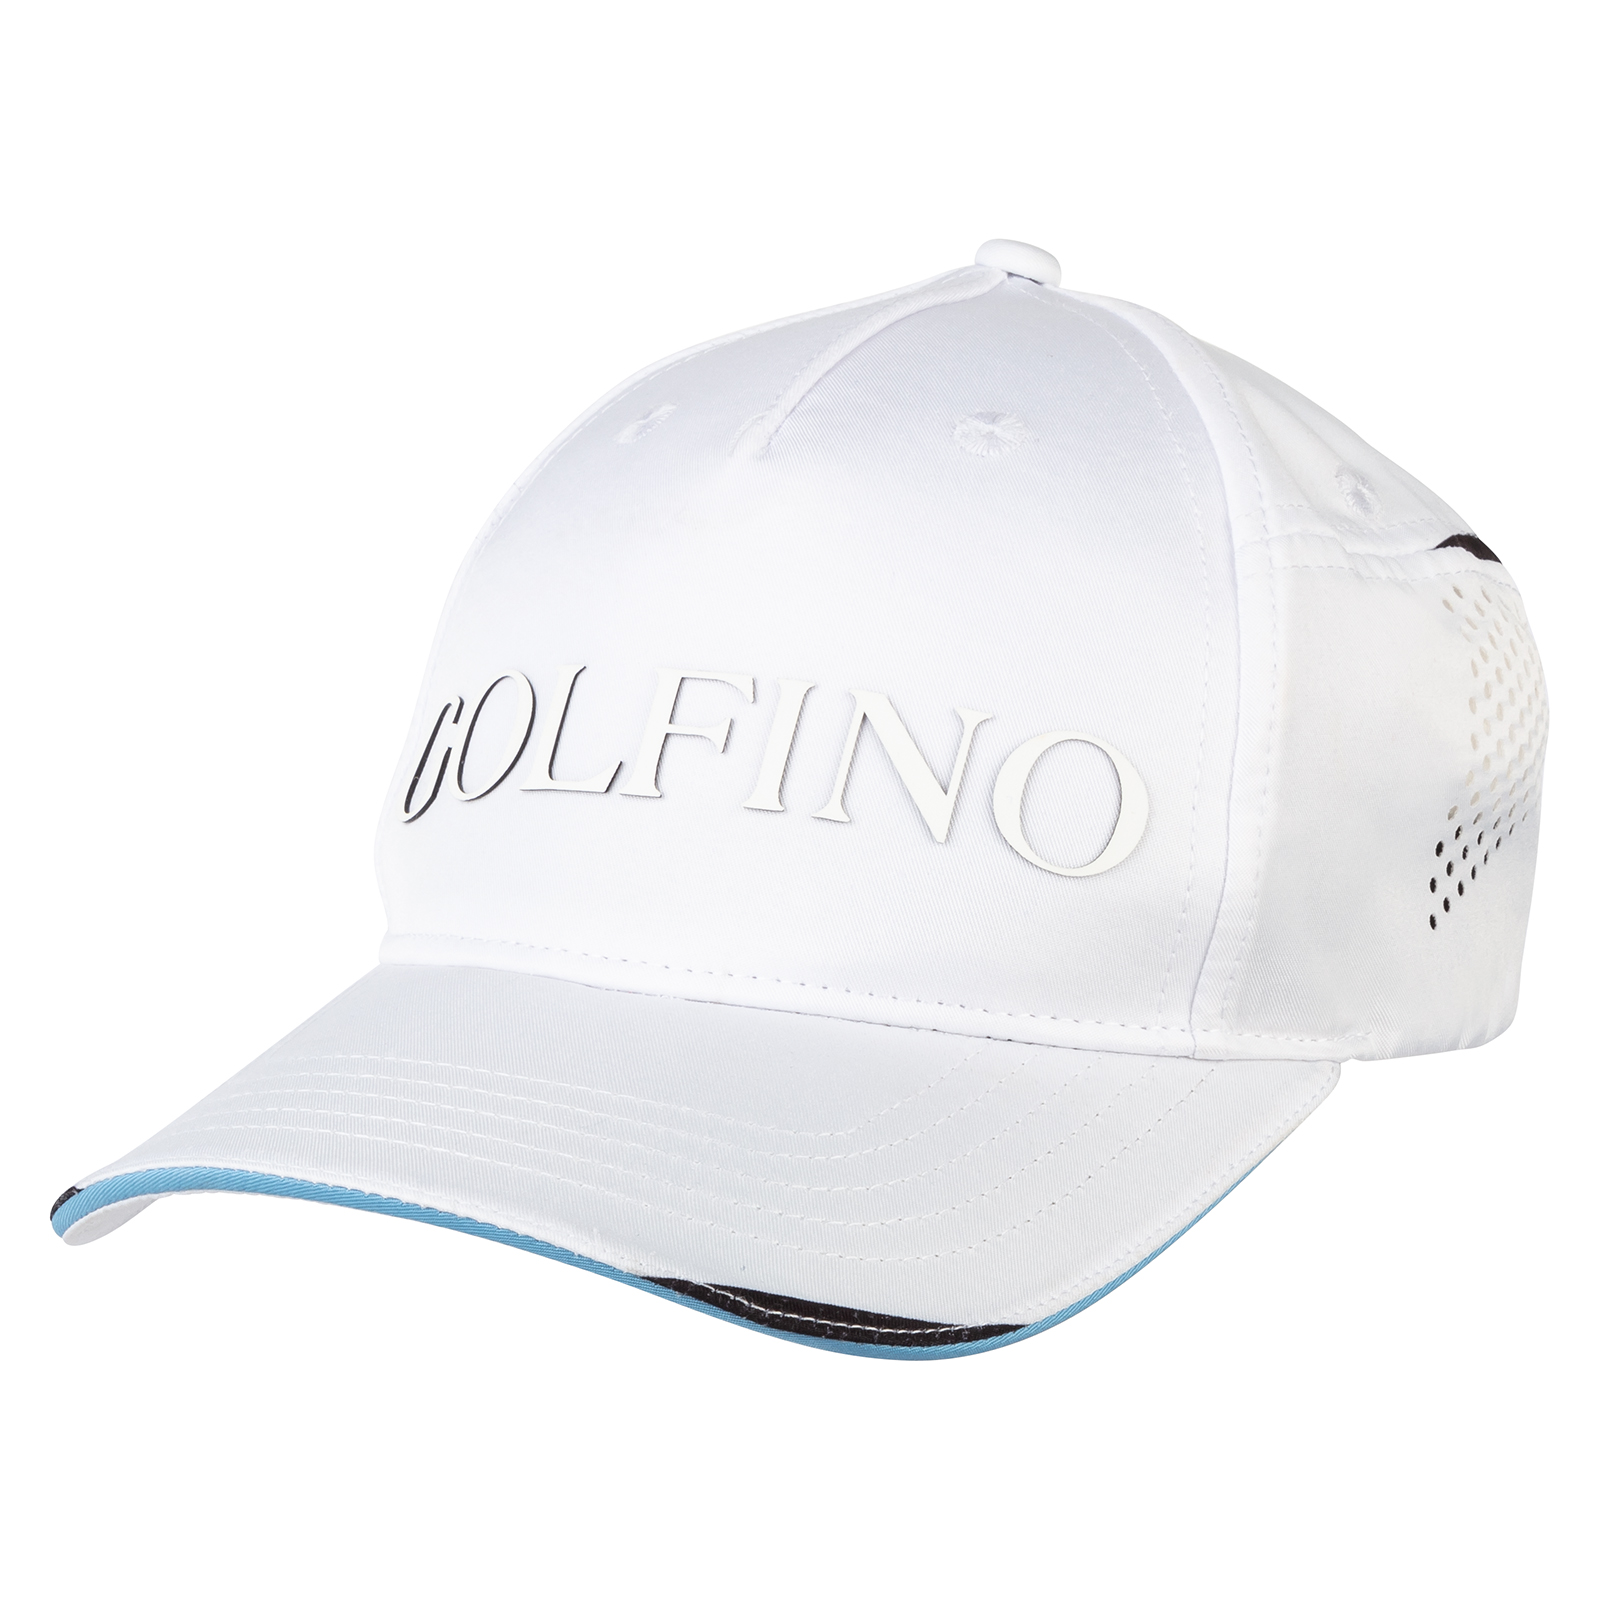 Men's performance golf cap with 3D printed logo 